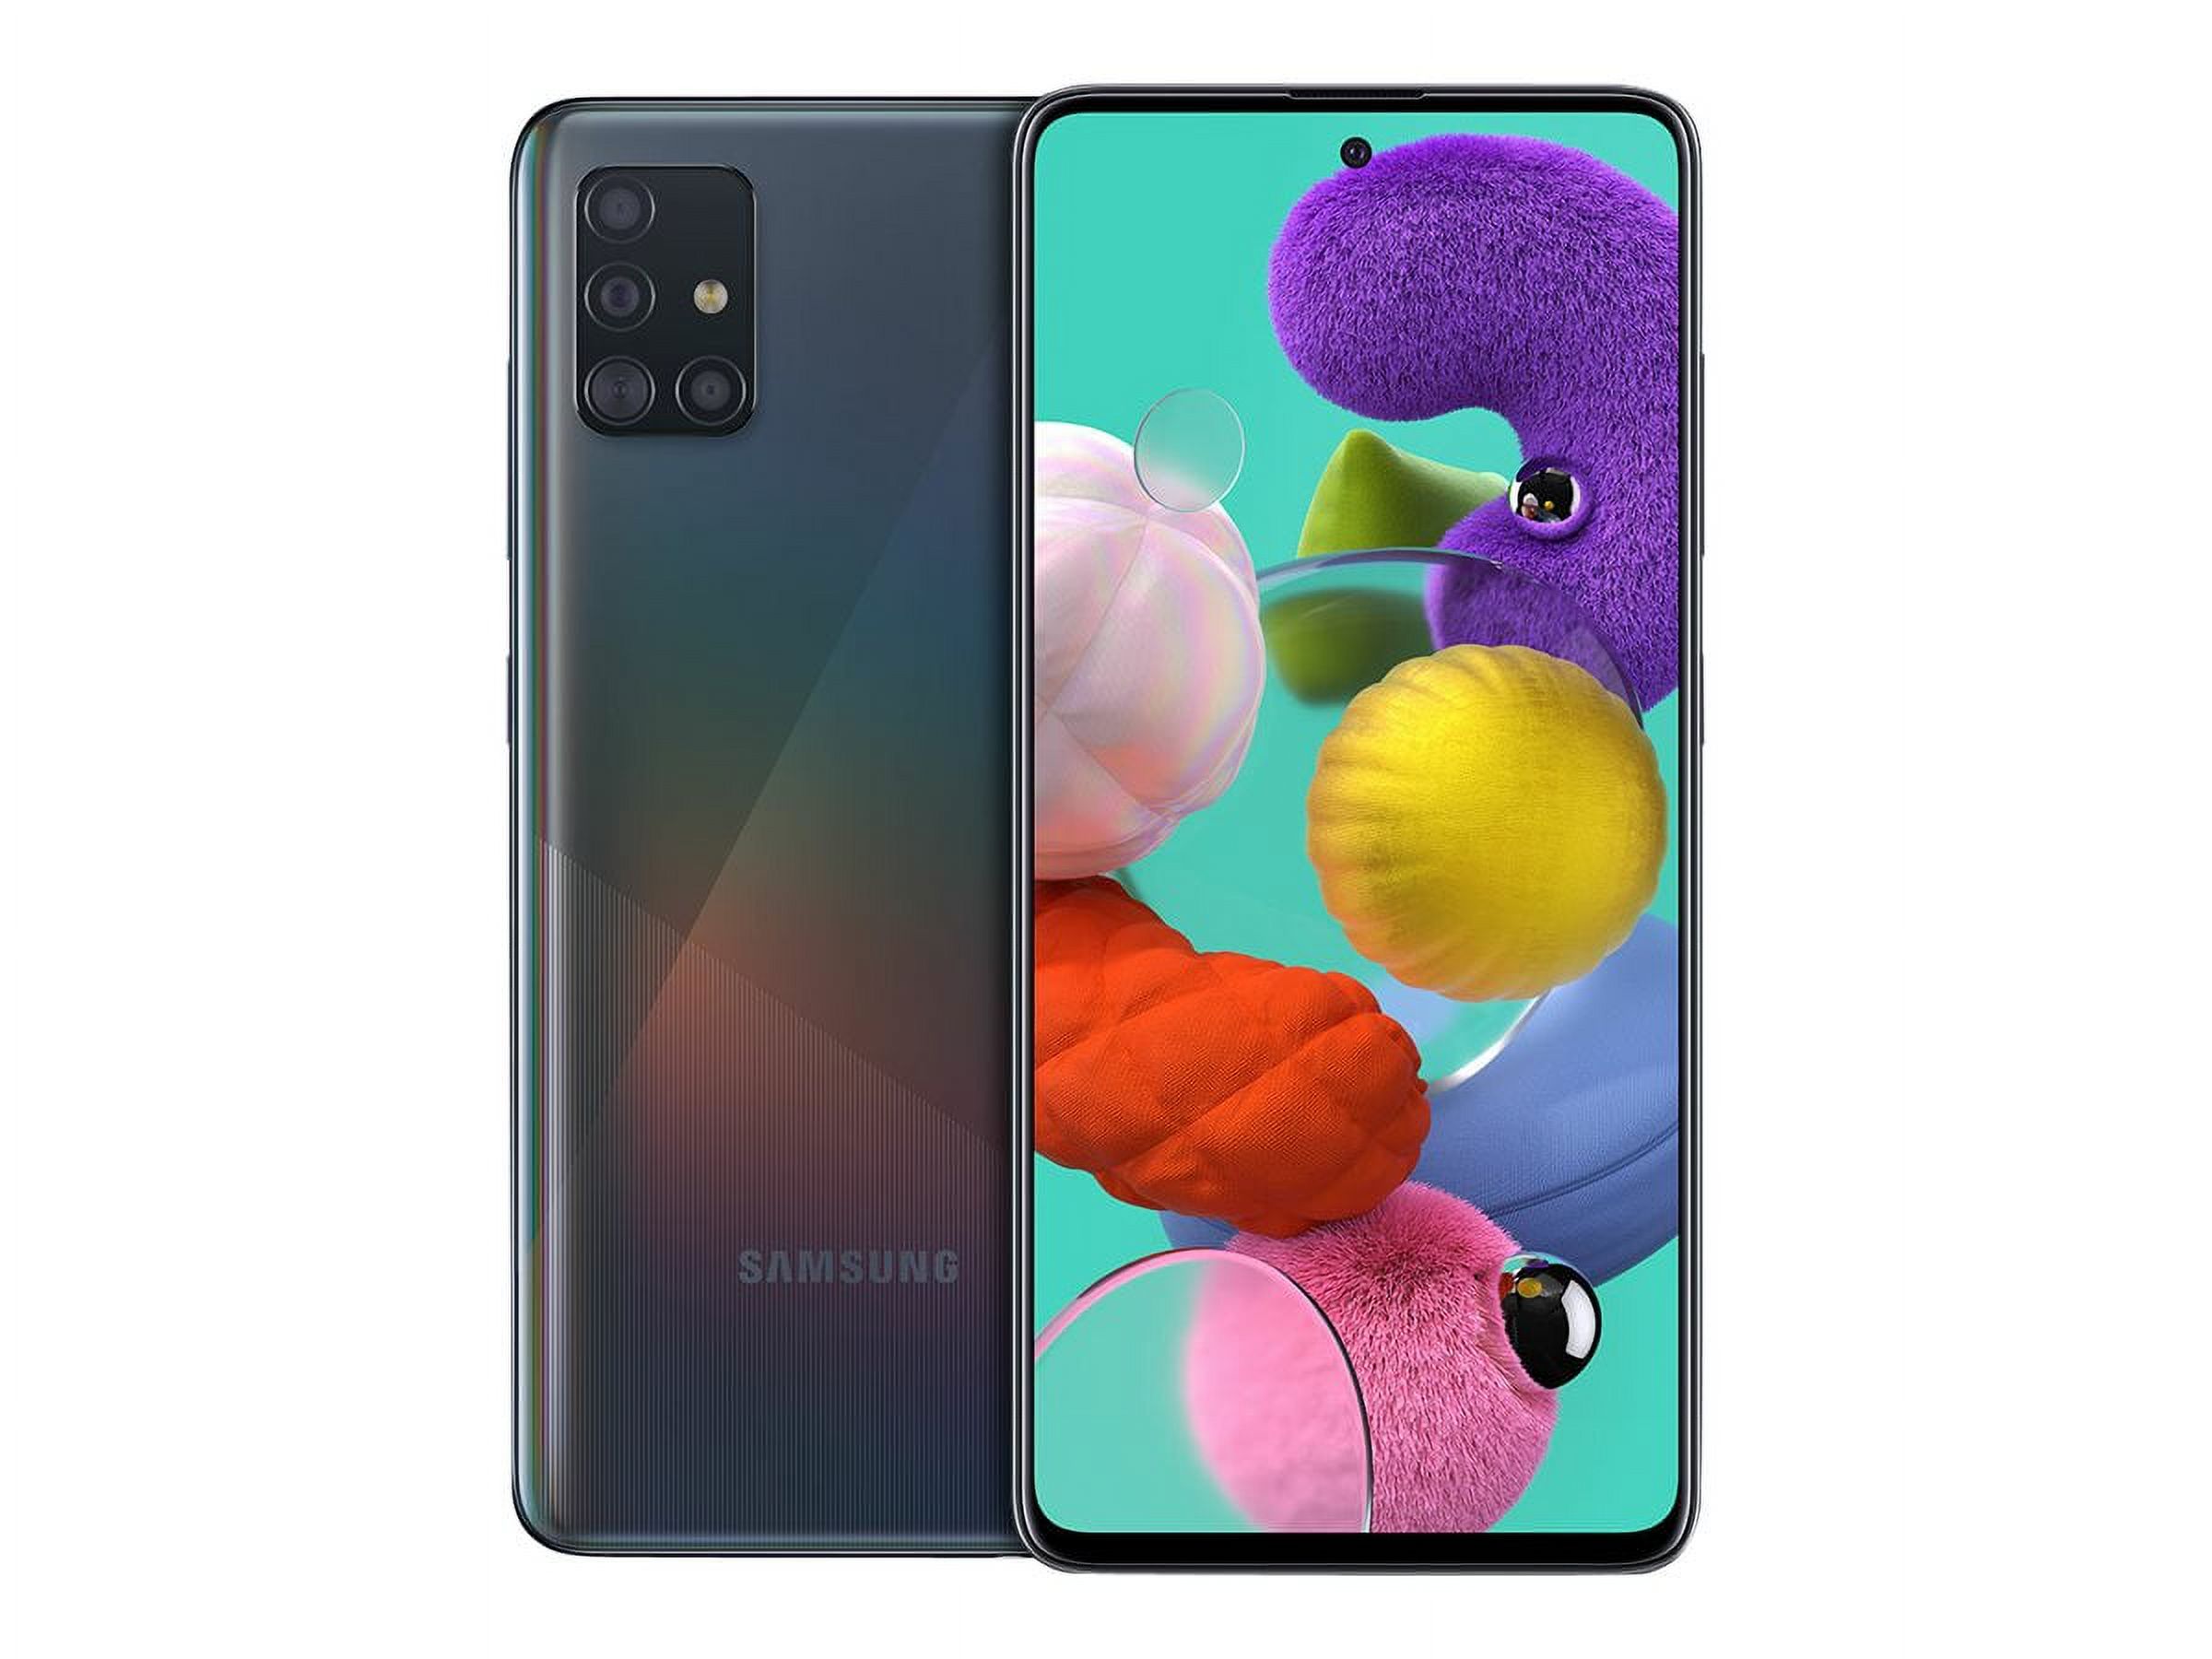 Samsung Galaxy A51 - Smartphone - 4G LTE - 128 GB - microSD slot - 6.5" - 2400 x 1080 pixels - Super AMOLED - RAM 4 GB (32 MP front camera) - 4x rear cameras - Android - Sprint - Prism crush black - image 2 of 7